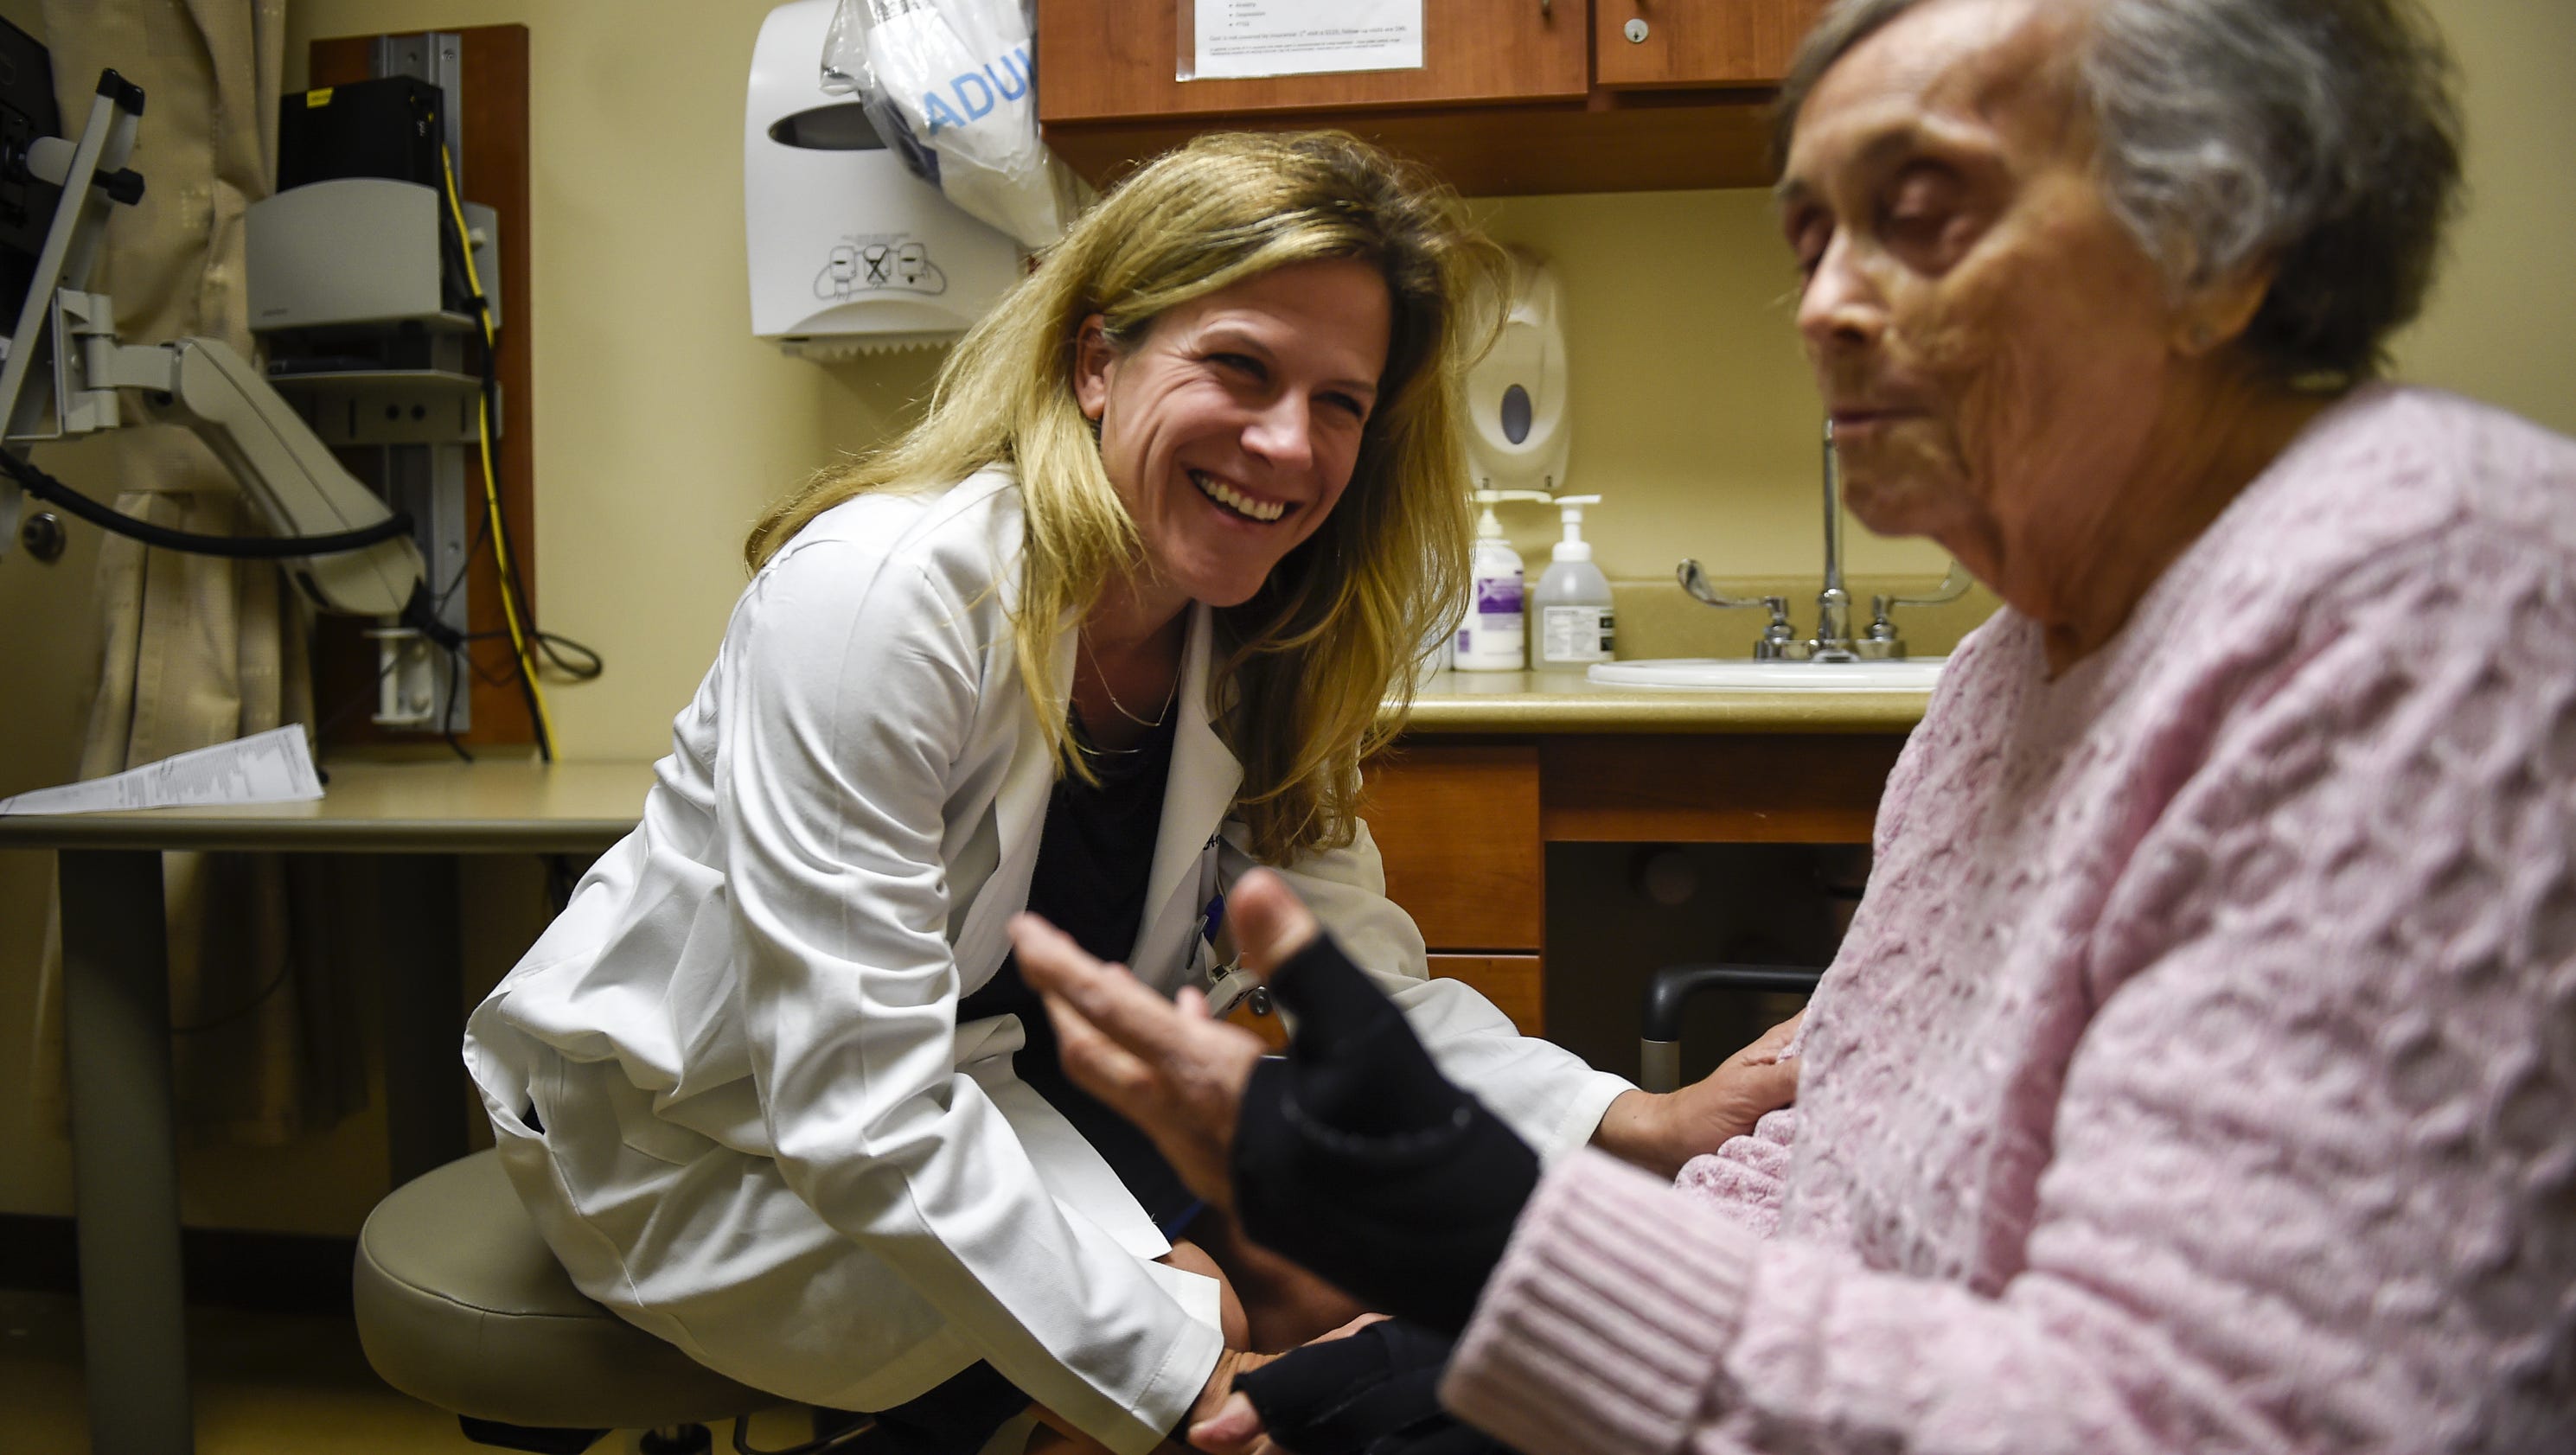 An opioid alternative: Vanderbilt doctor's relief retreats give pain patients their lives back